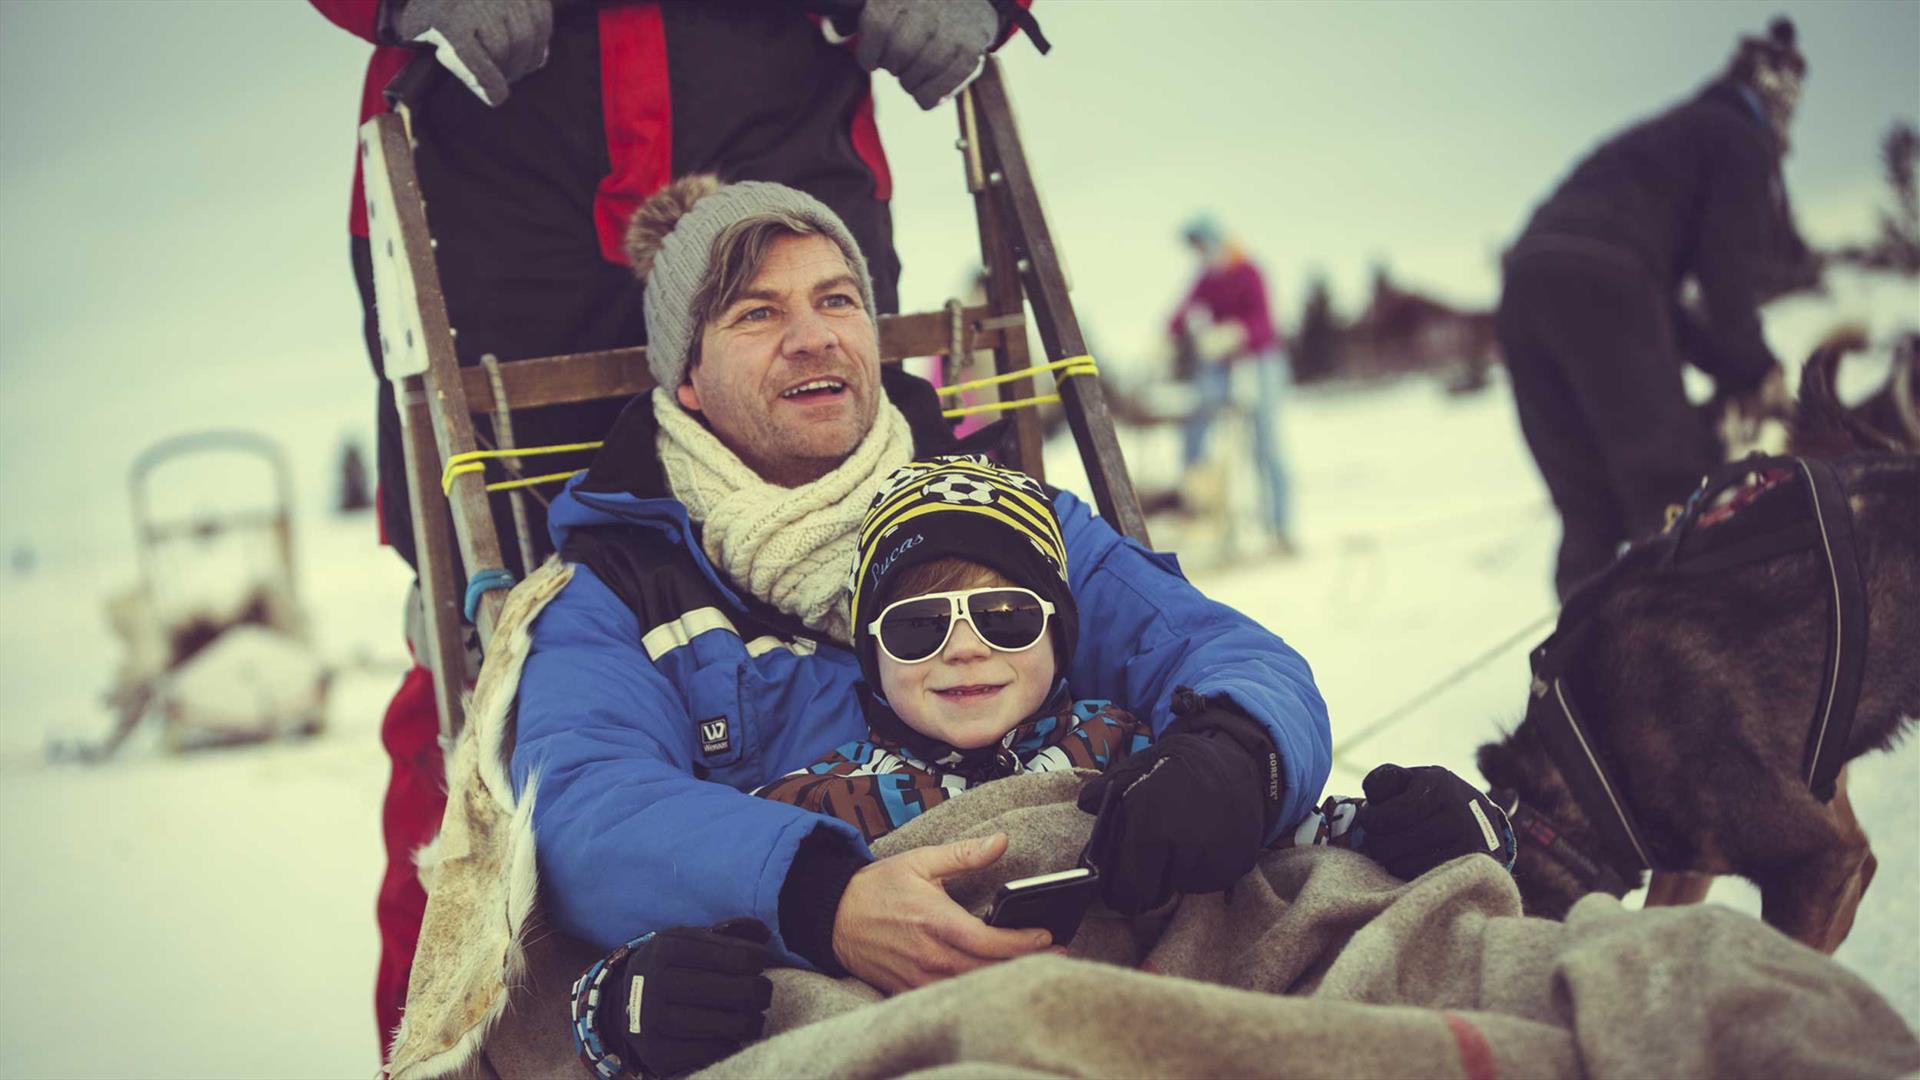 Family enjoys dog sledding with Sjusjøen Husky